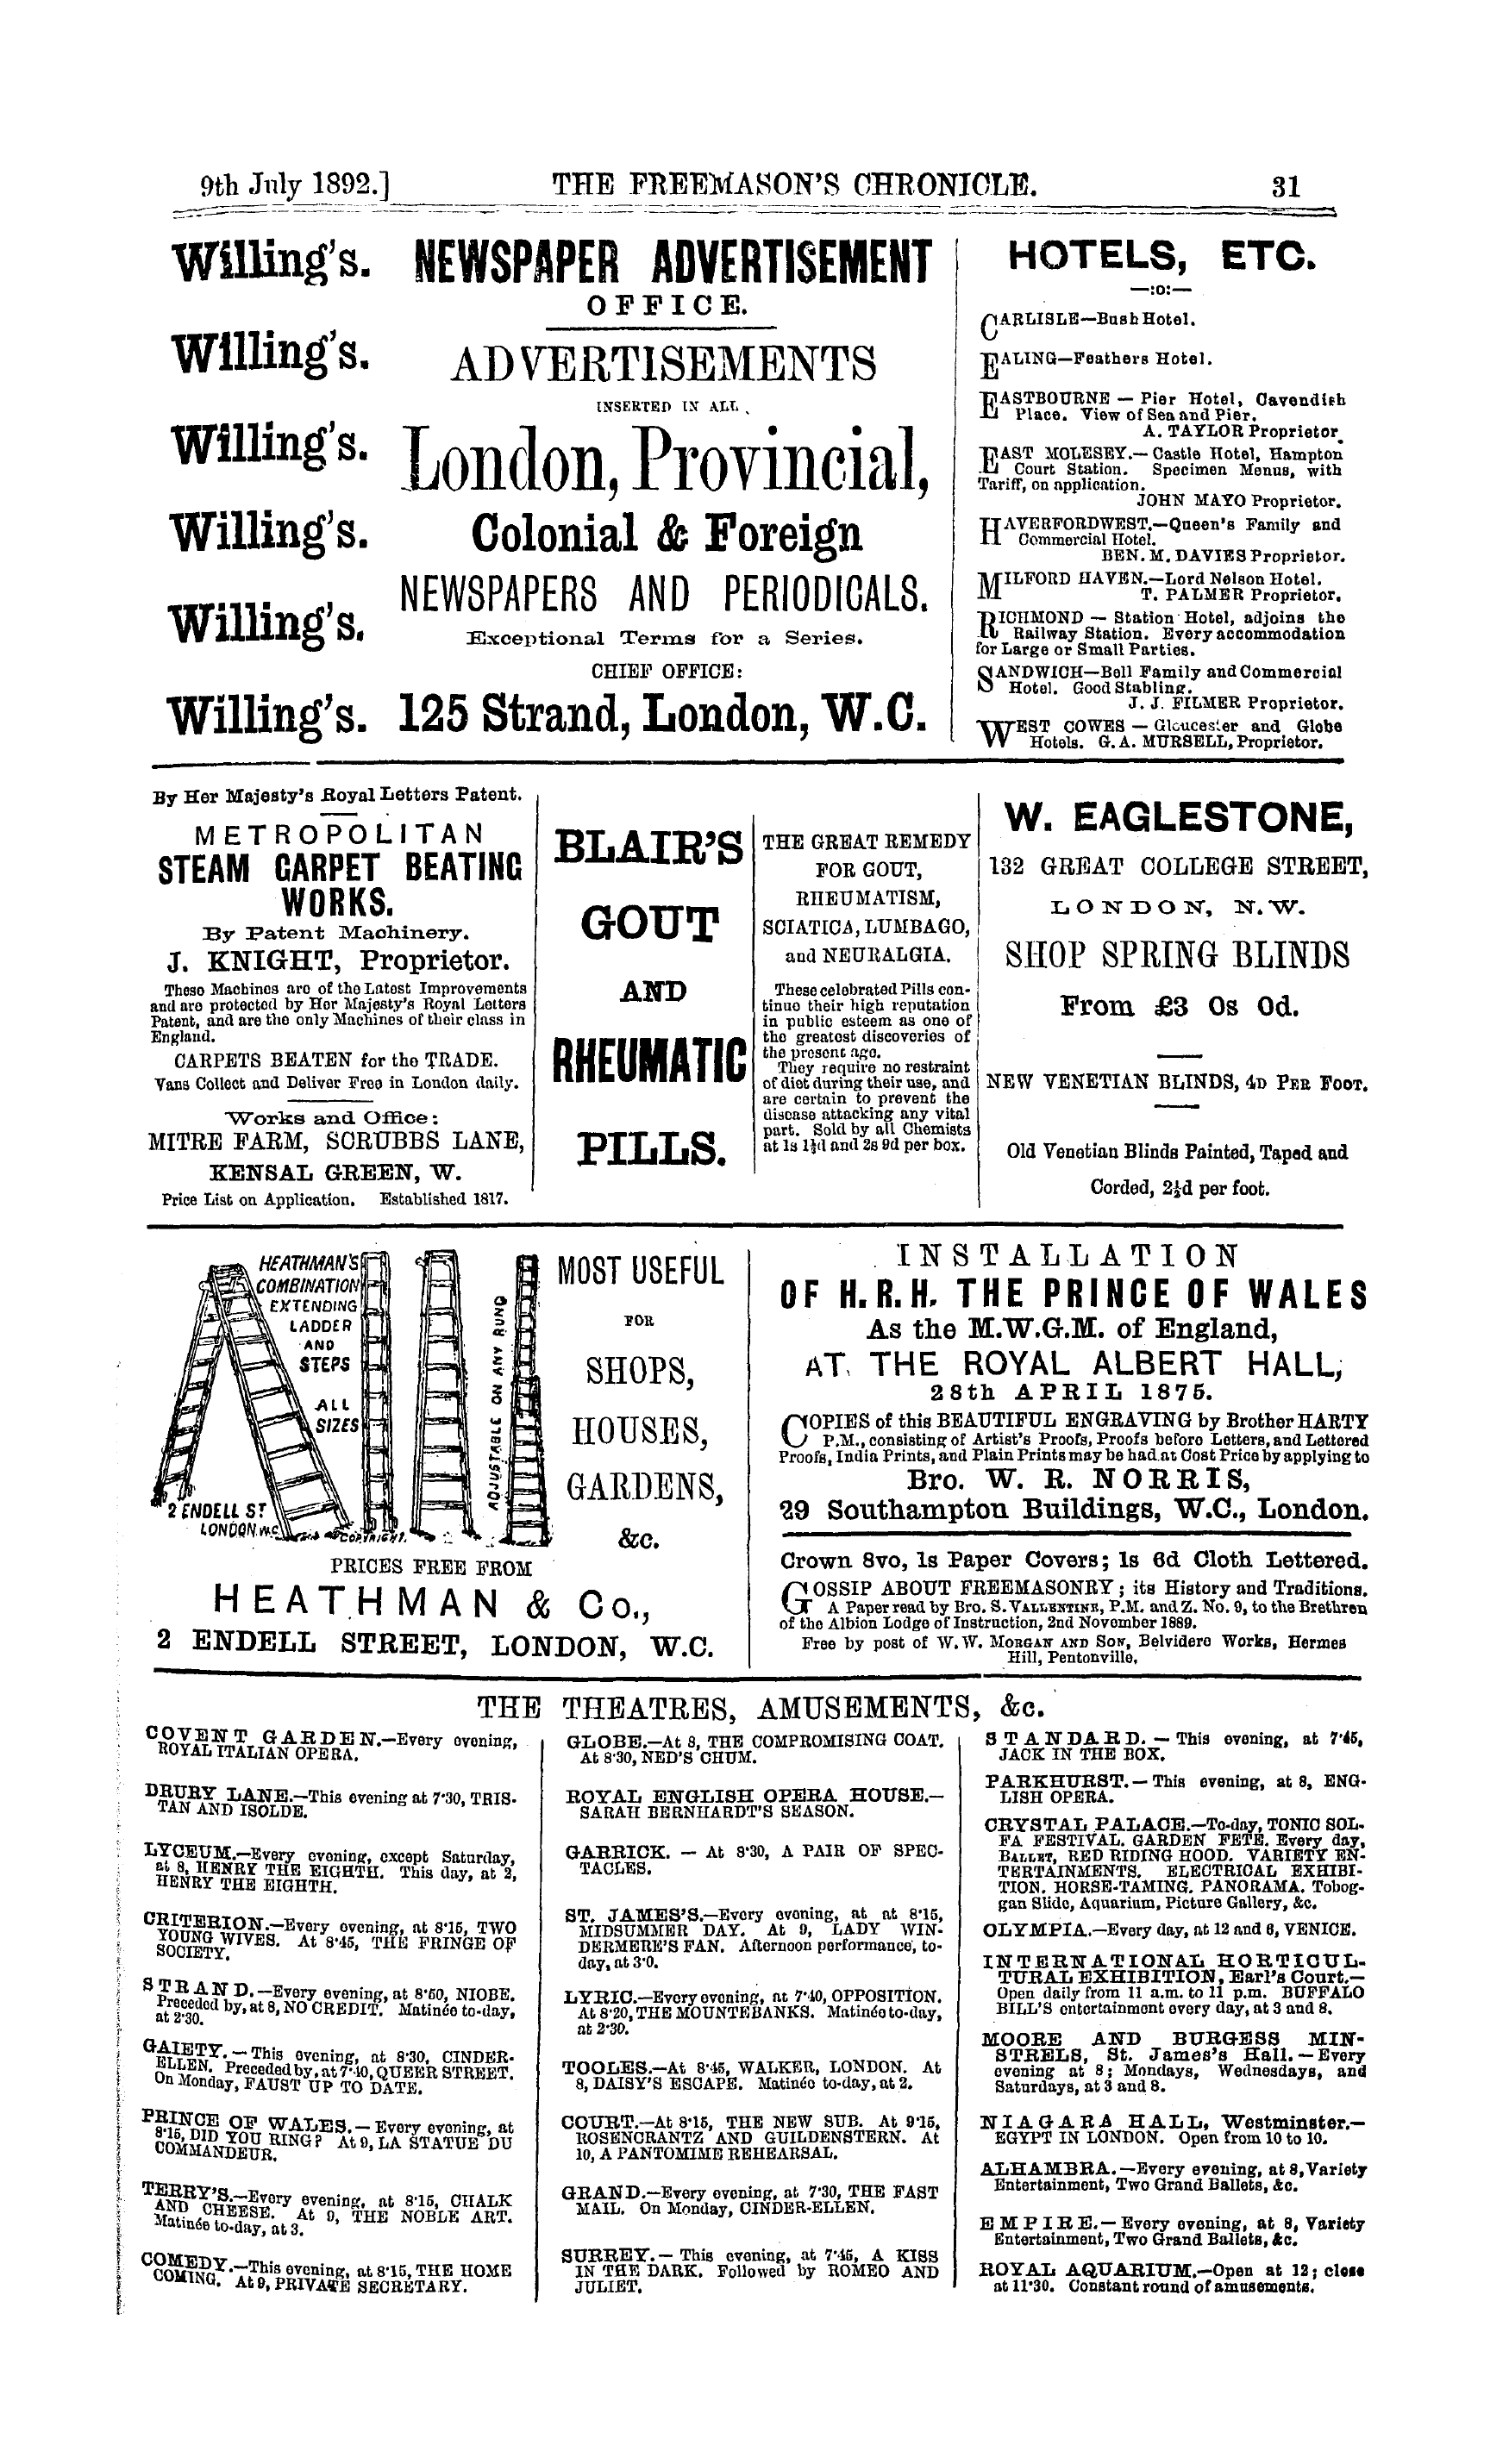 The Freemason's Chronicle: 1892-07-09 - The Theatres, Amusements, &C.